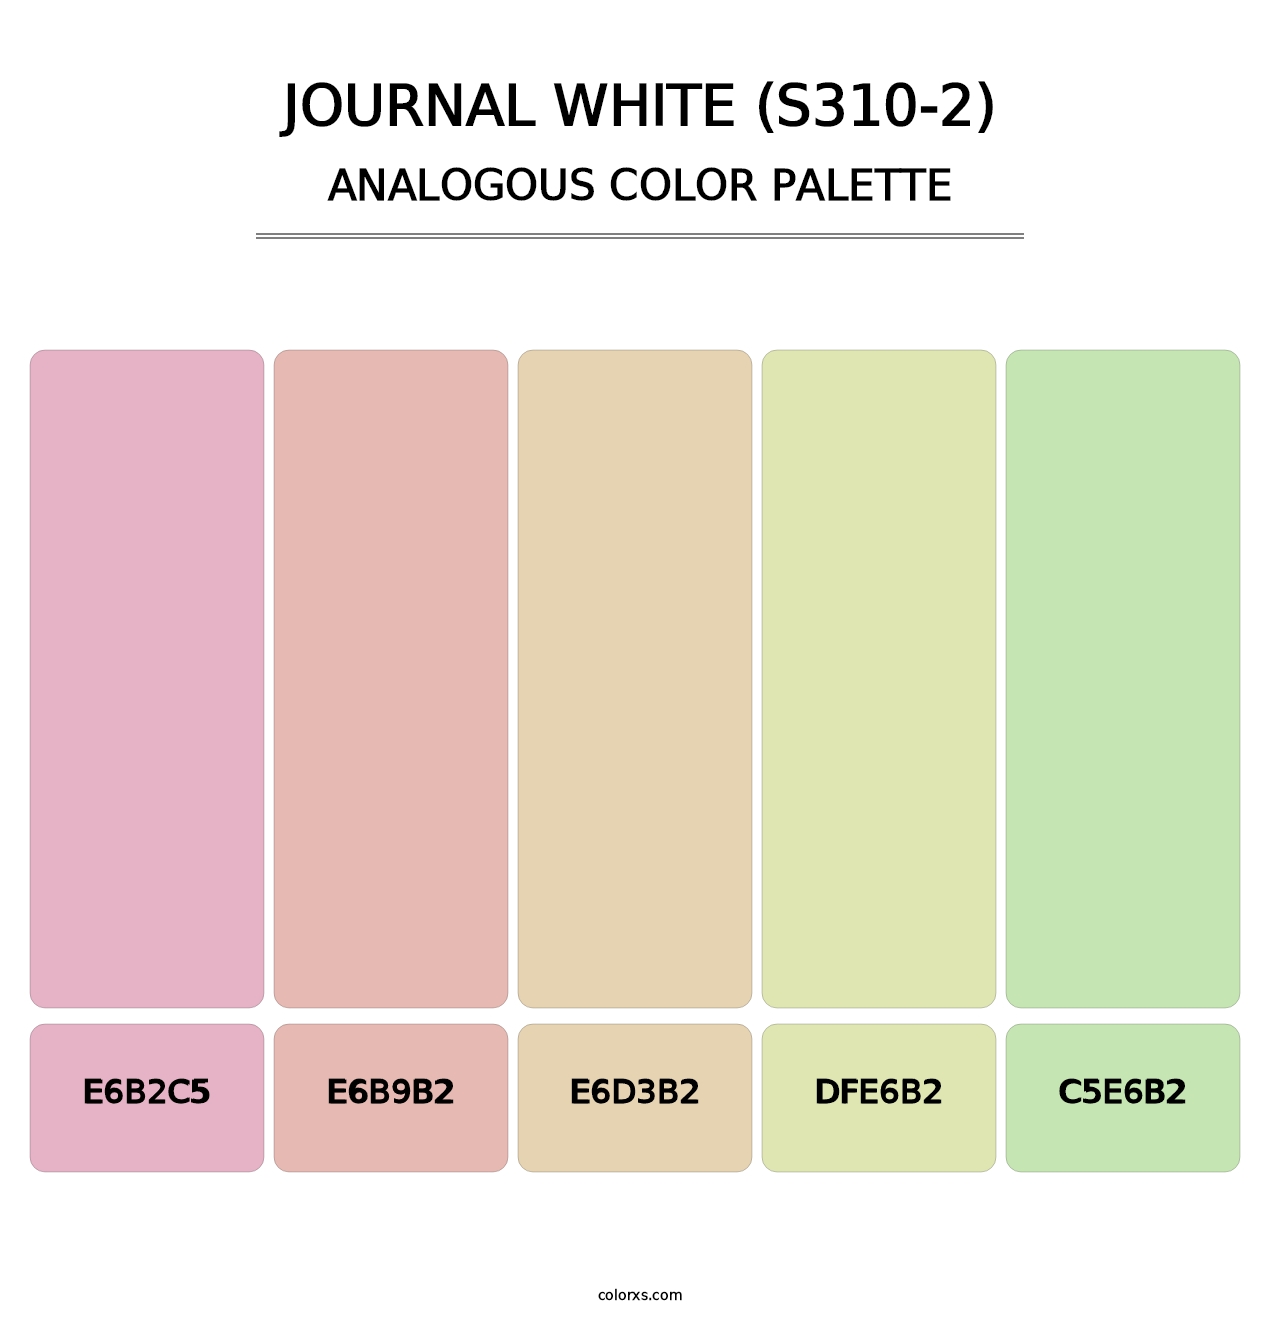 Journal White (S310-2) - Analogous Color Palette